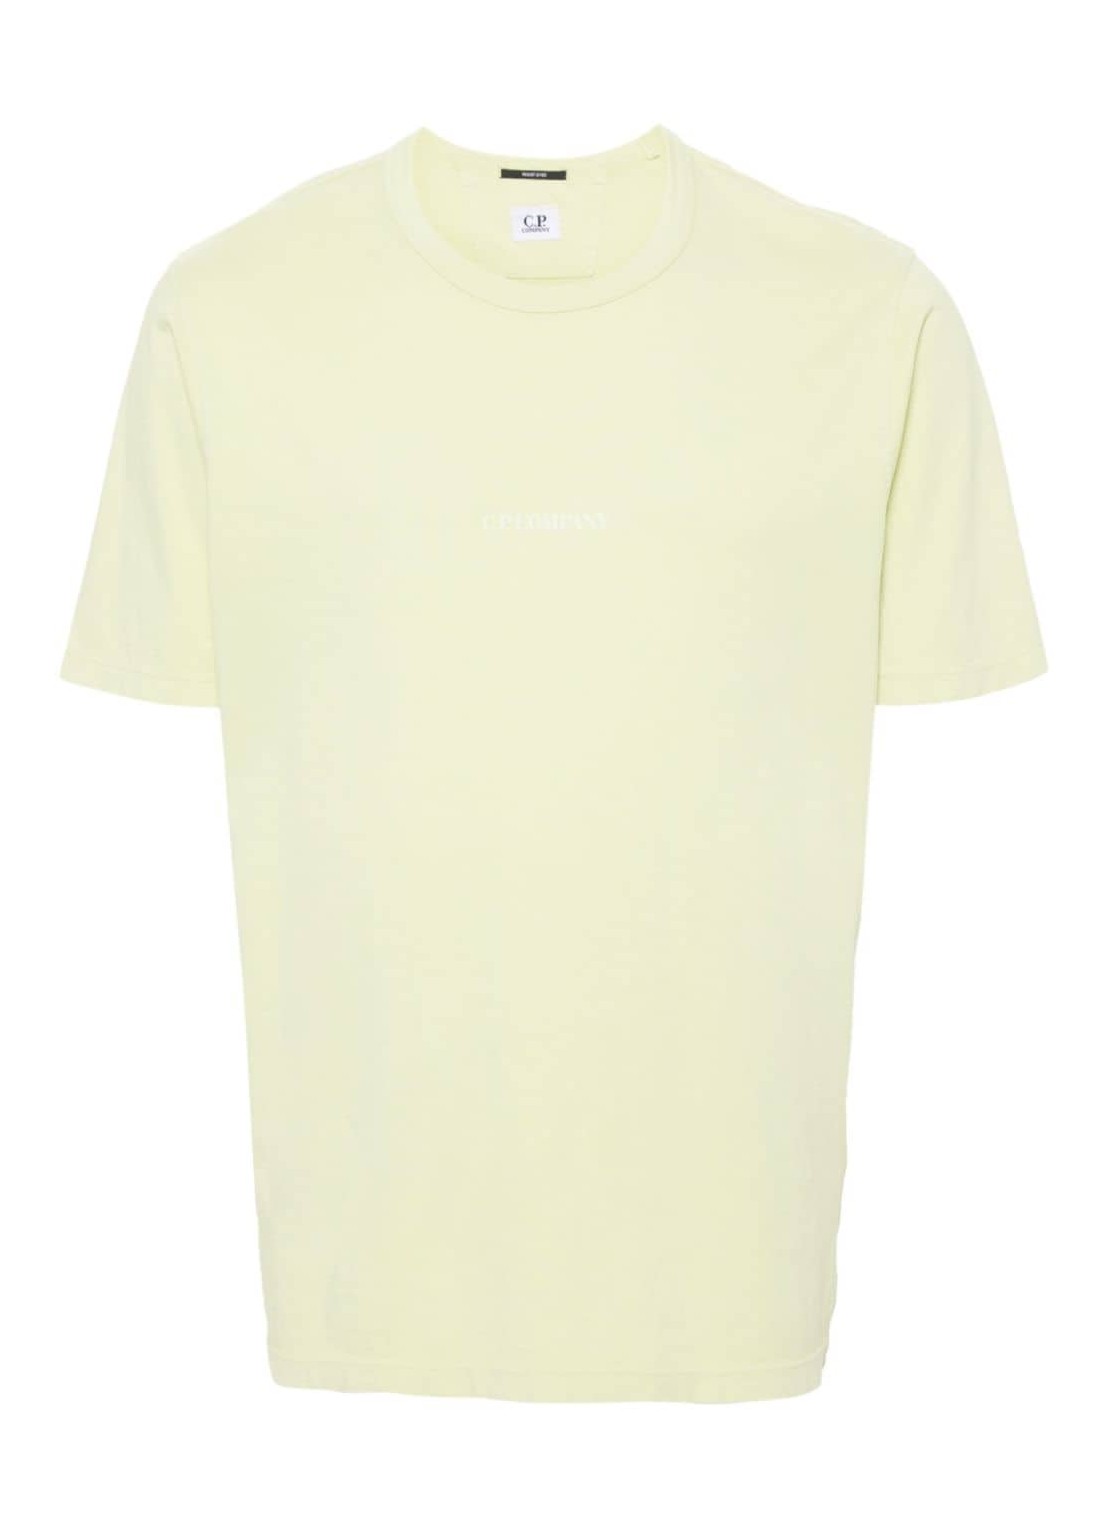 Camiseta c.p.company t-shirt man 24/1 jersey resist dyed logo t-shirt 16cmts085a005431r 613 talla S
